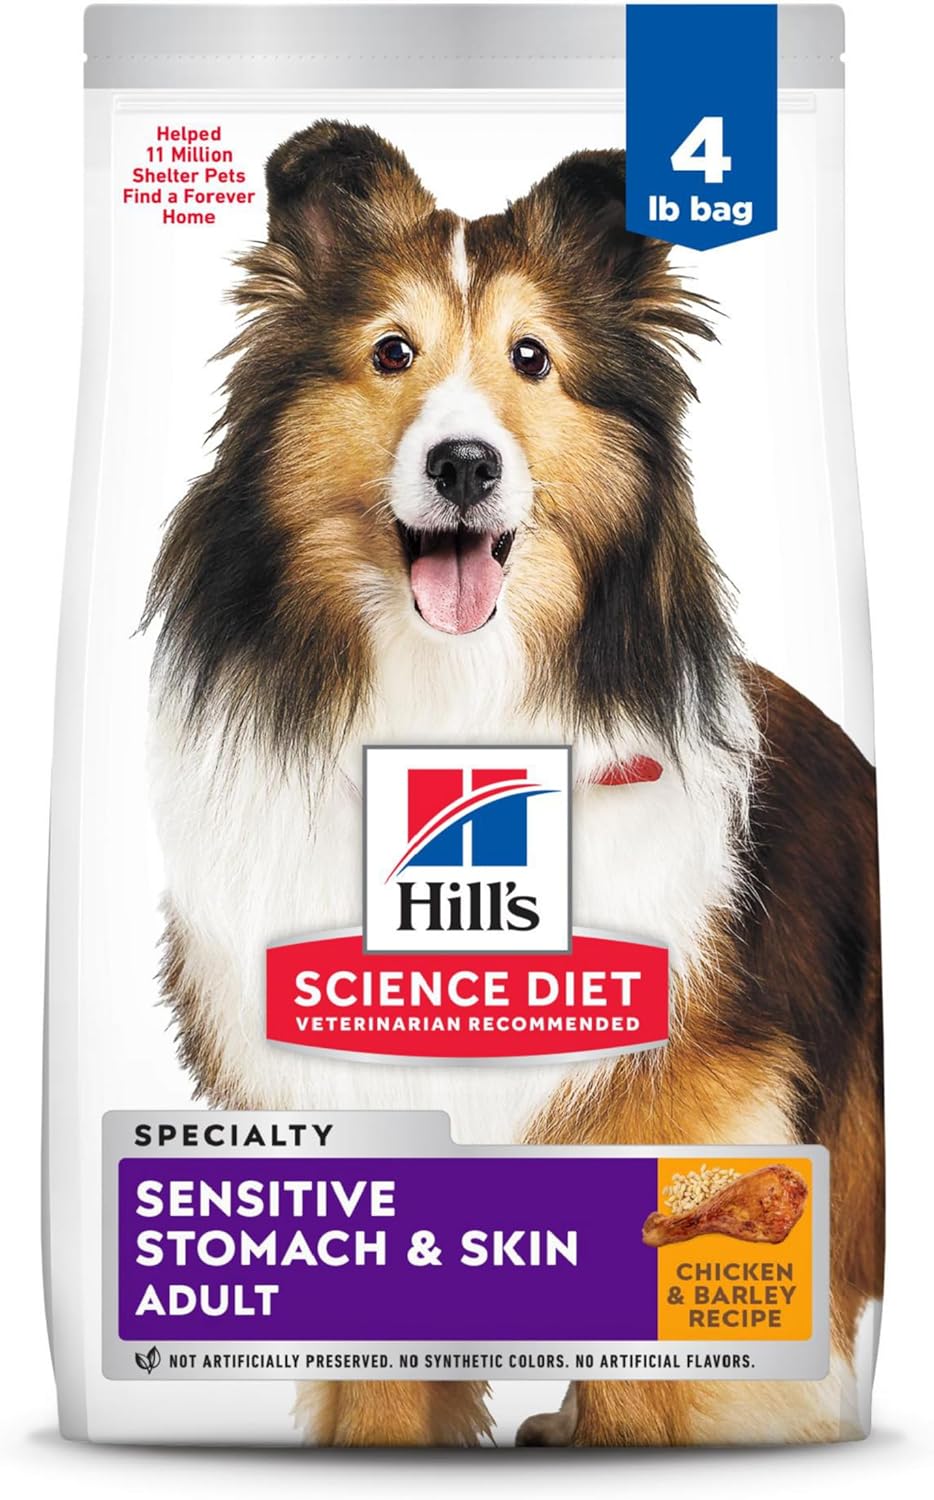 Hill's Science Diet Sensitive Stomach & Skin, Adult 1-6, Stomach & Skin Sensitivity Supoort, Dry Dog Food, Chicken Recipe, 4 lb Bag